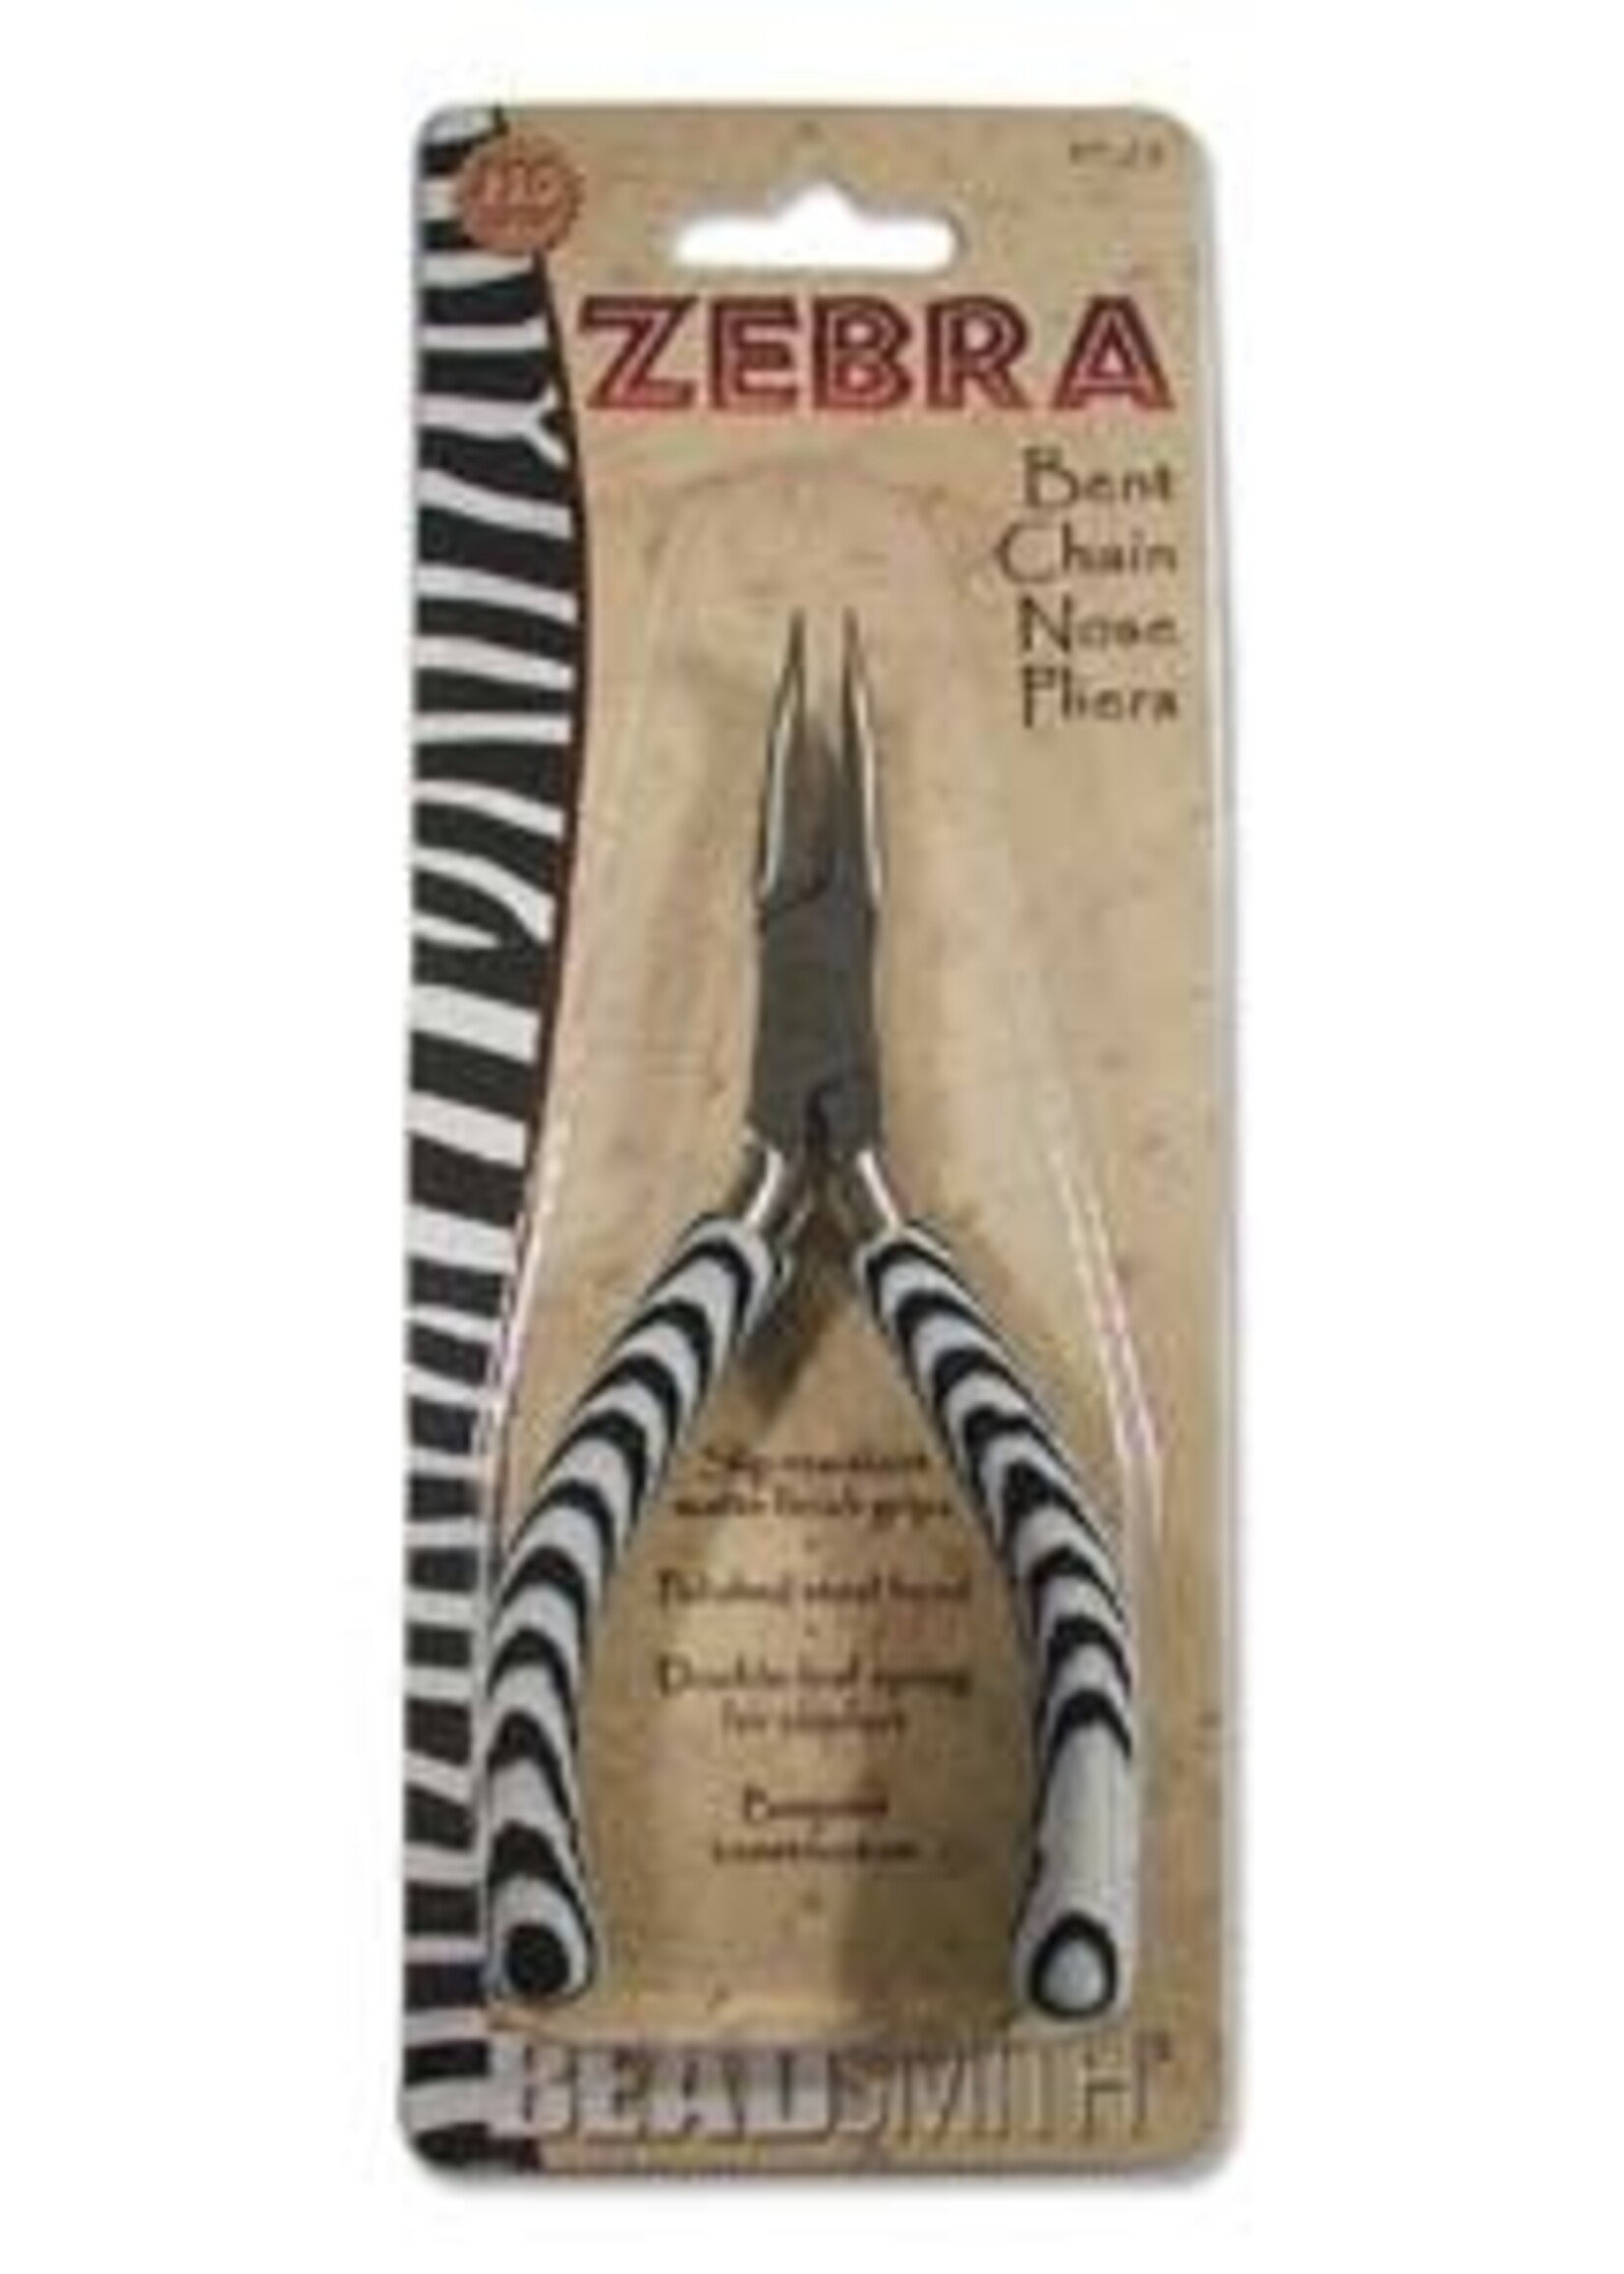 Zebra Bent Chain Nose Pliers